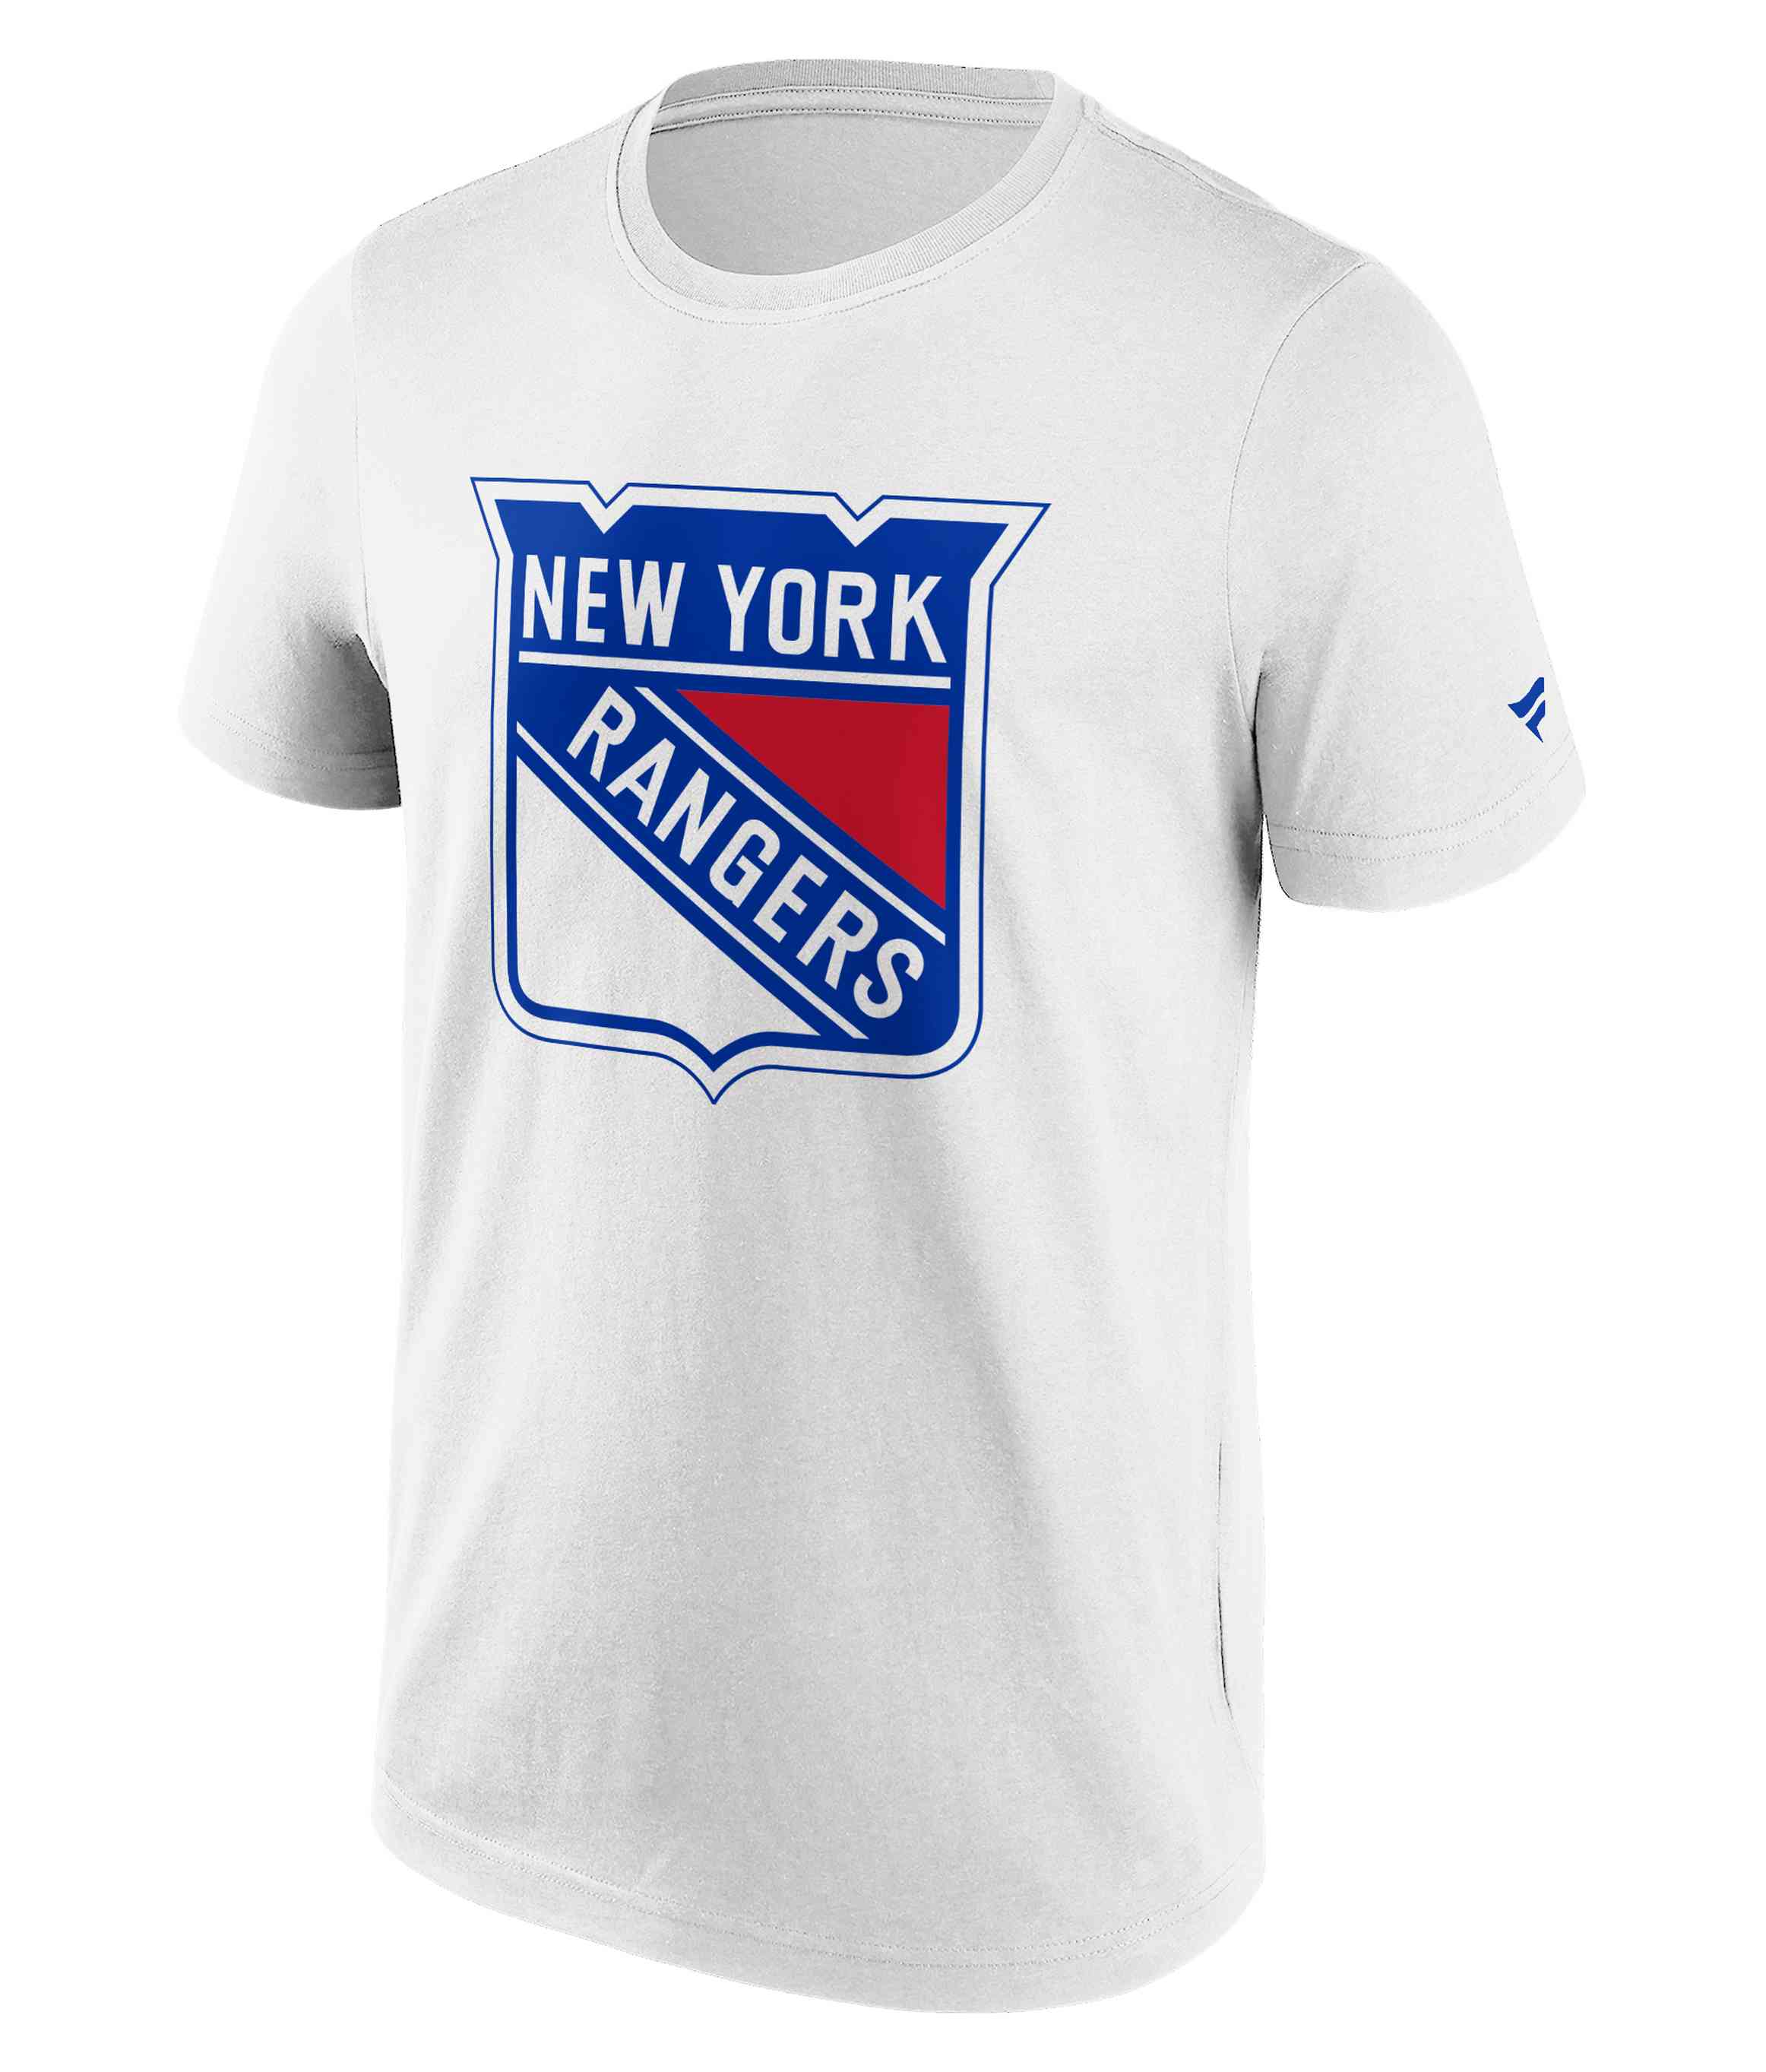 Fanatics - NHL New York Rangers Primary Logo Graphic T-Shirt